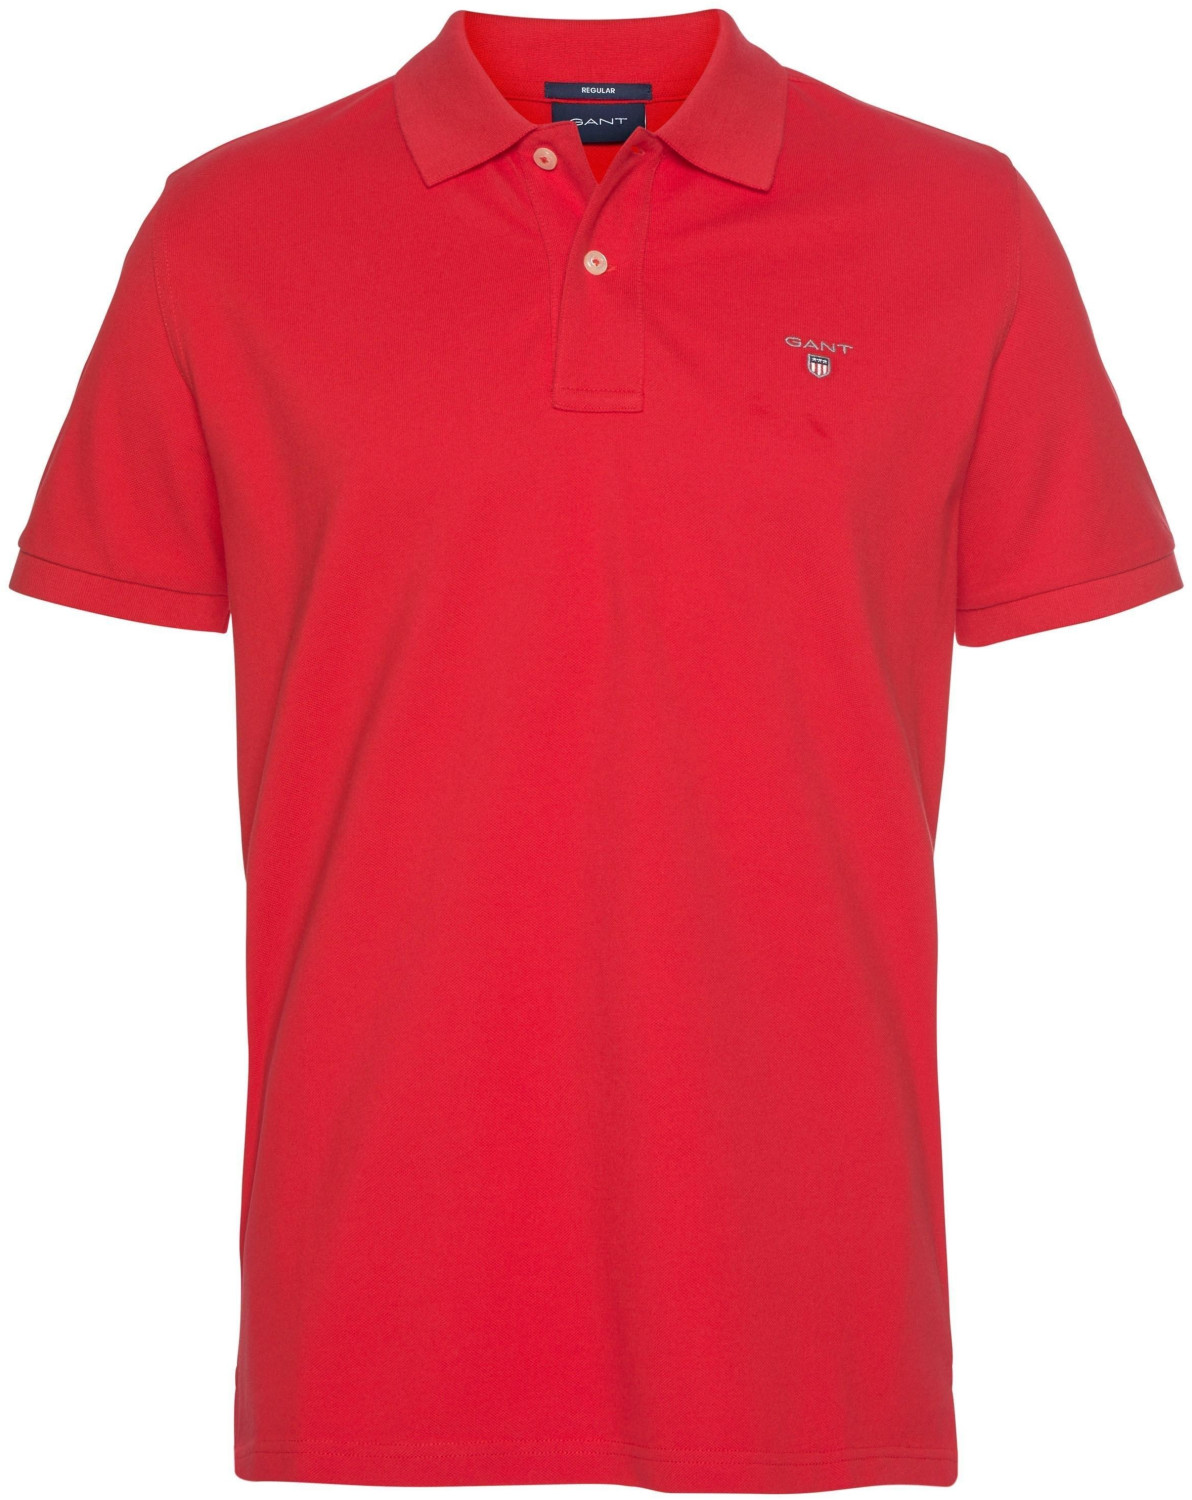 GANT Bestseller Polo € Preisvergleich 51,95 bei | Piqué (2201) bright Shirt red ab